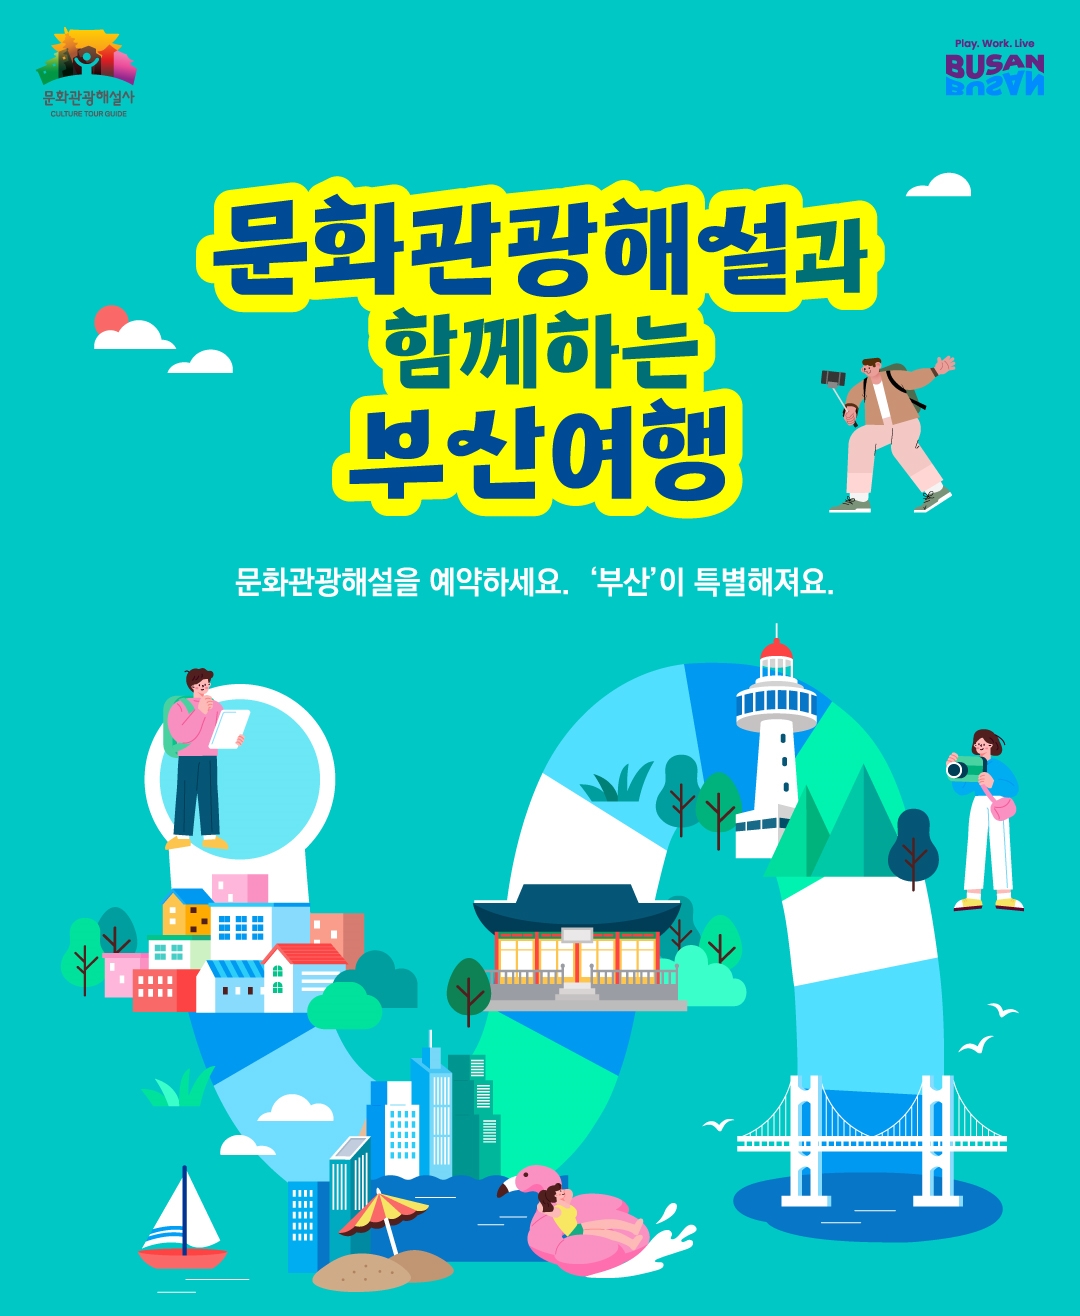 Daily Busan April 28 pic1 문화관광해설사